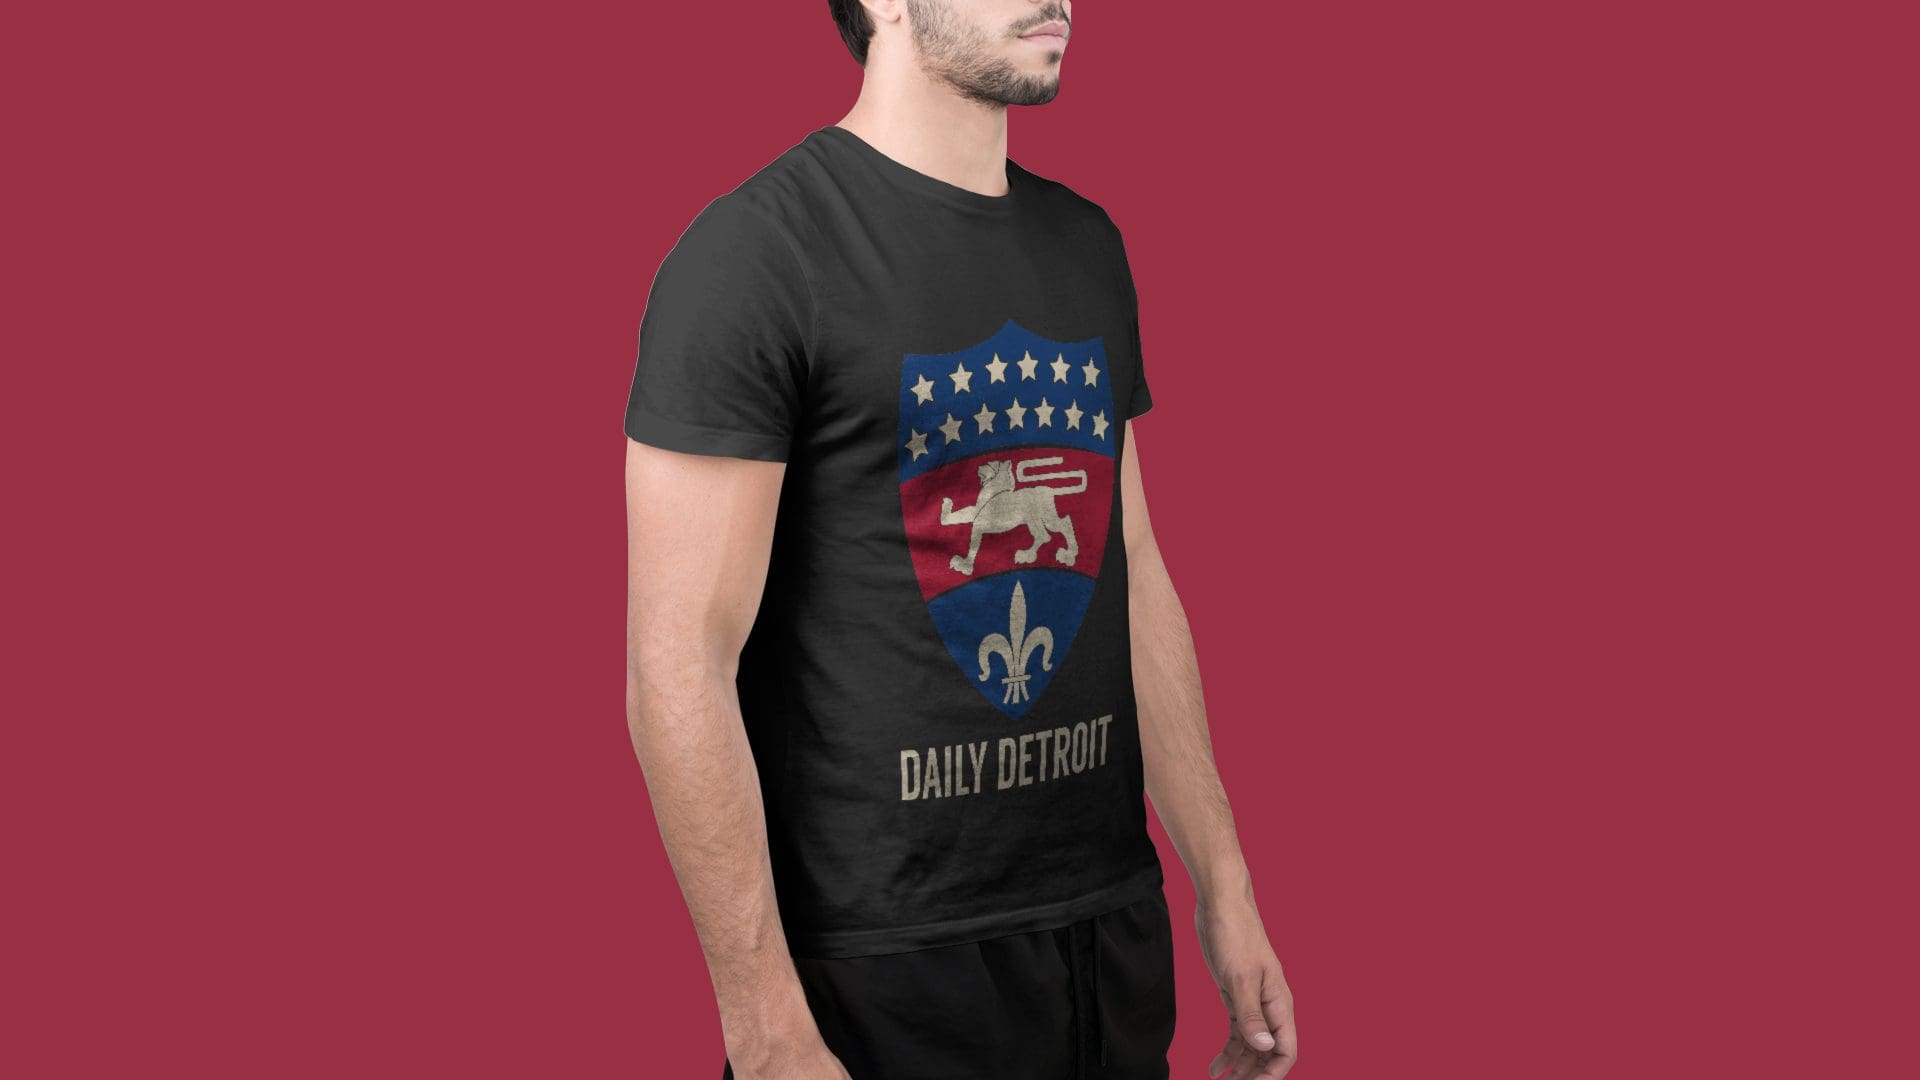 Daily Detroit – Shirt Design